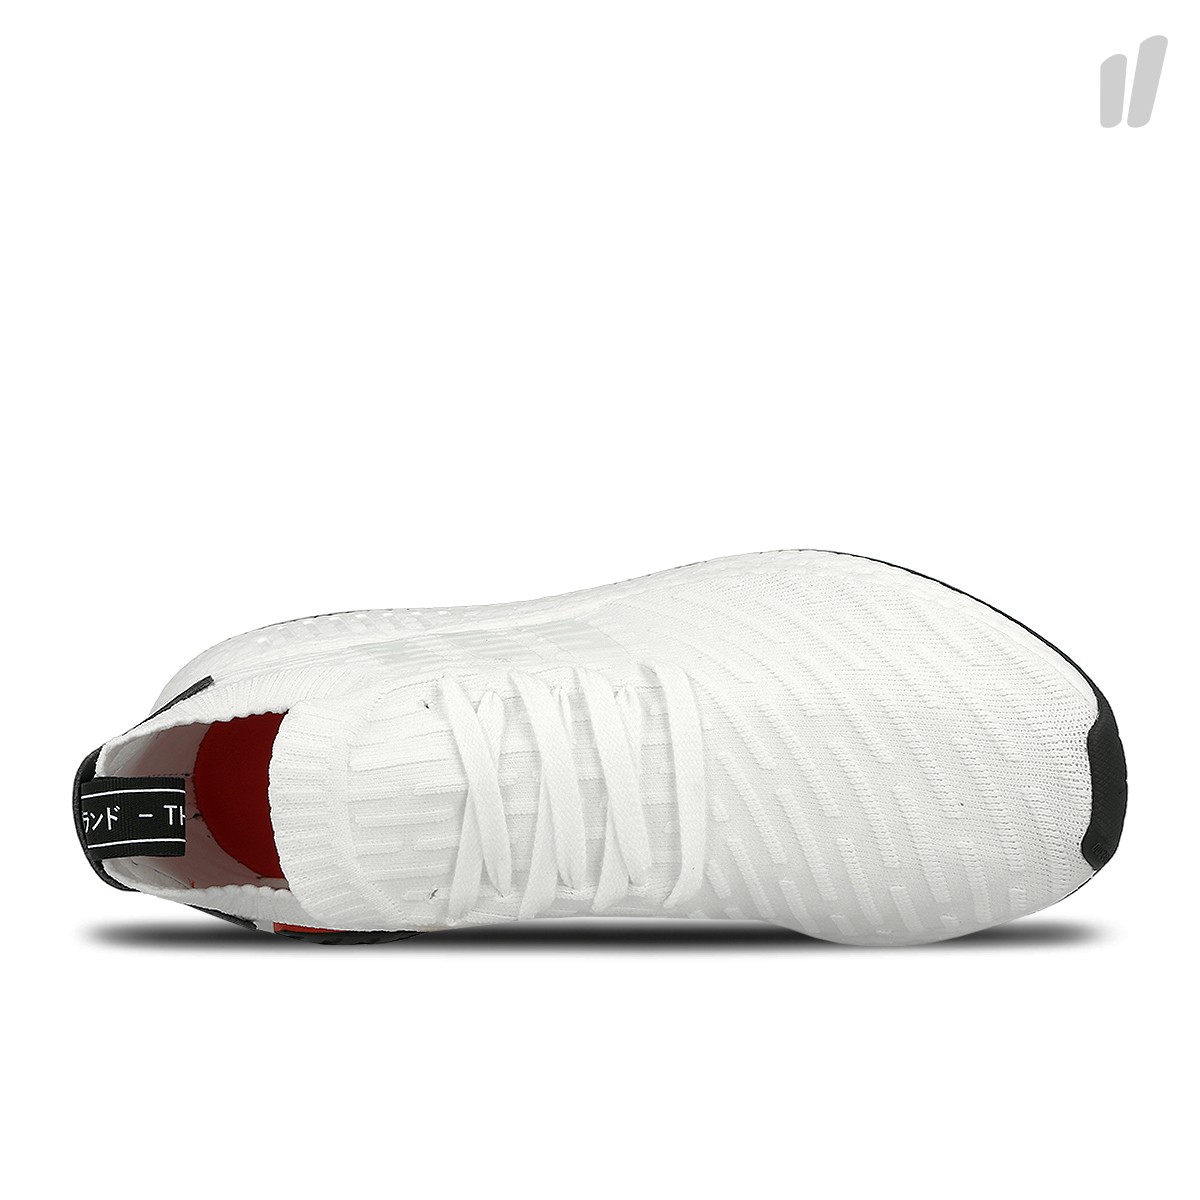 Adidas NMD_R2 Primeknit Footwear White / Core Black • Inside Sneakers